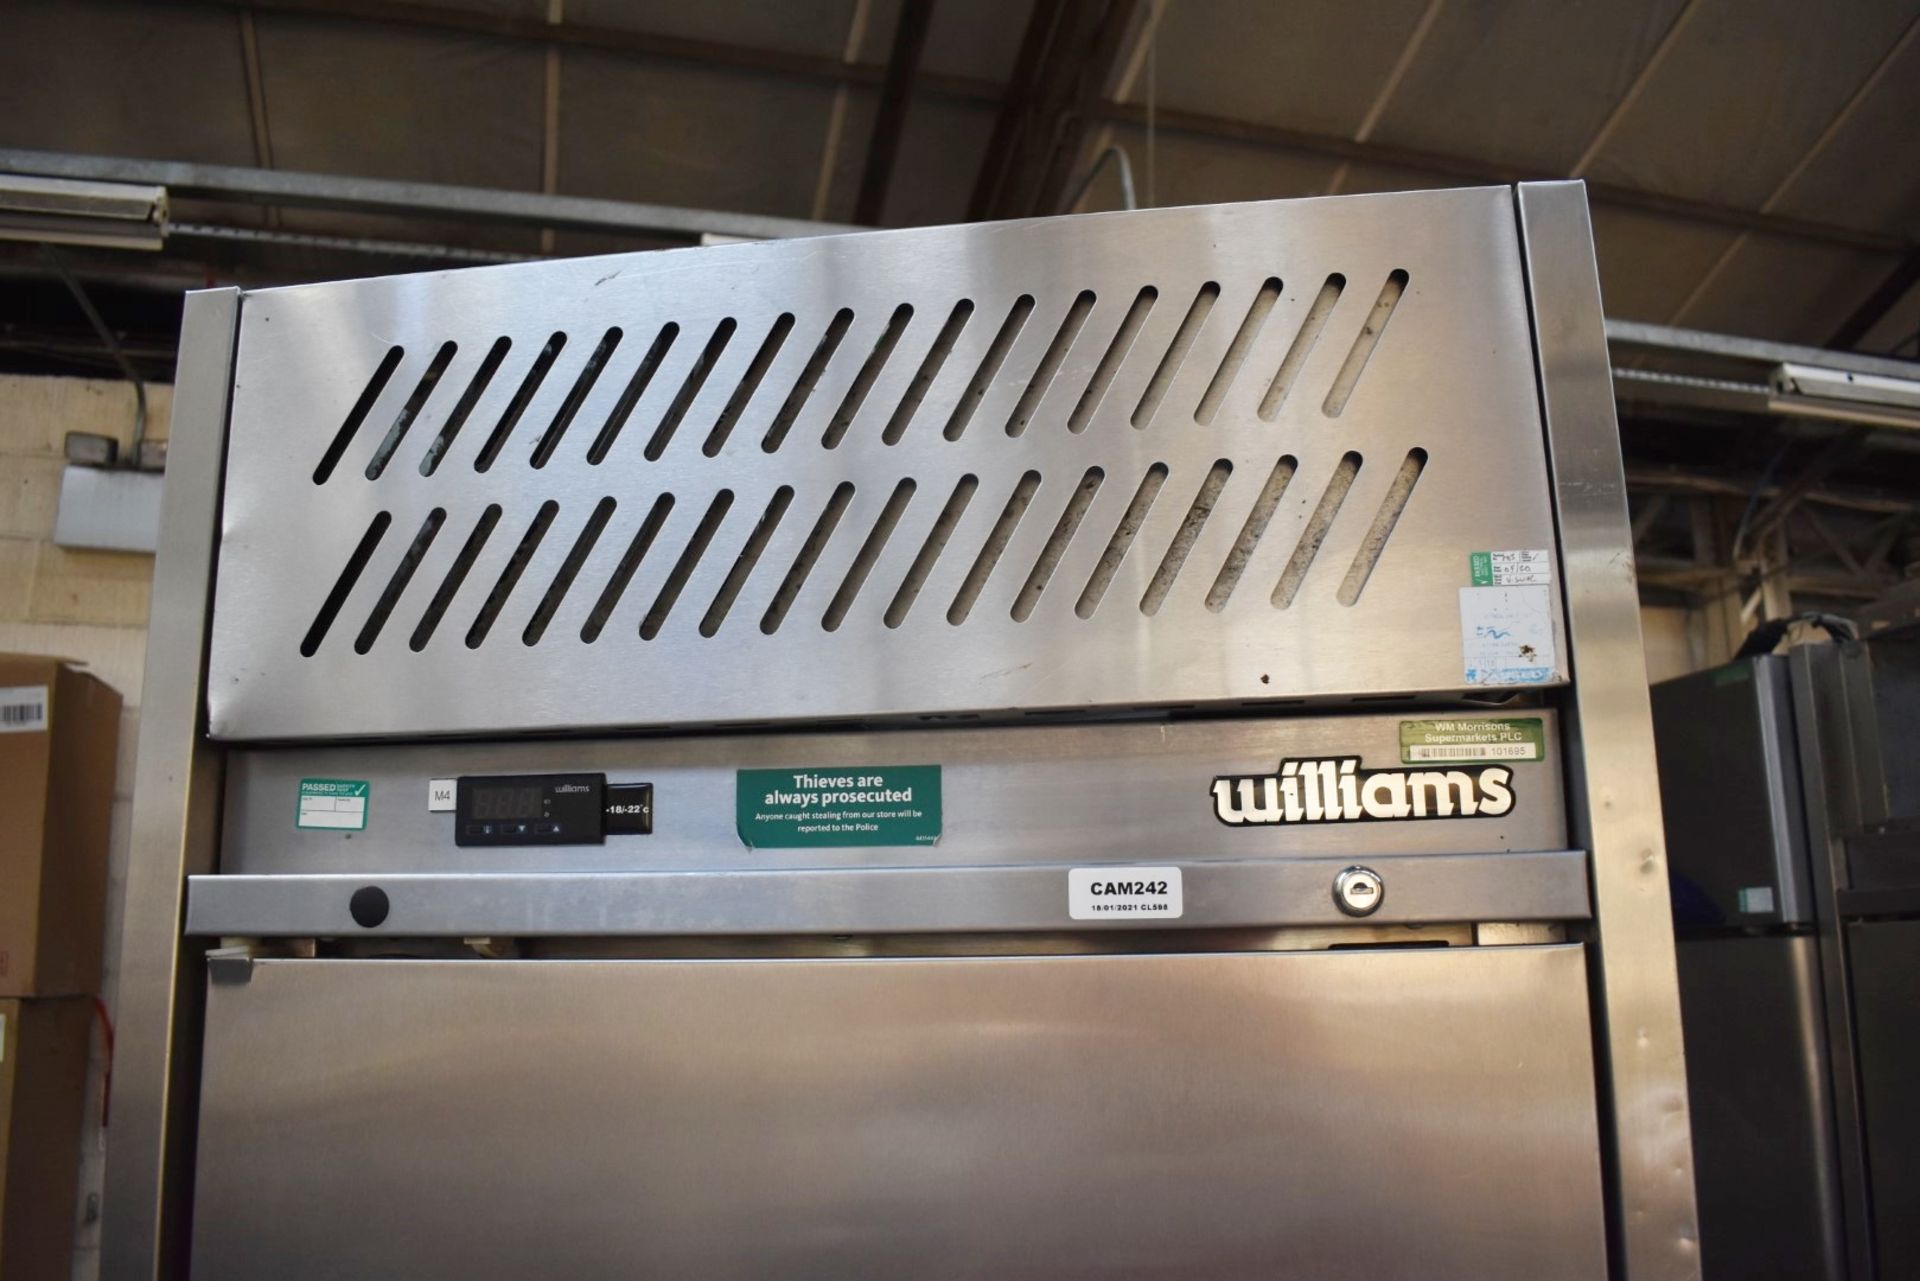 1 x Williams Jade Upright Single Door Refrigerator Stainless Steel Exterior & Internal Bakery Trays - Image 5 of 8